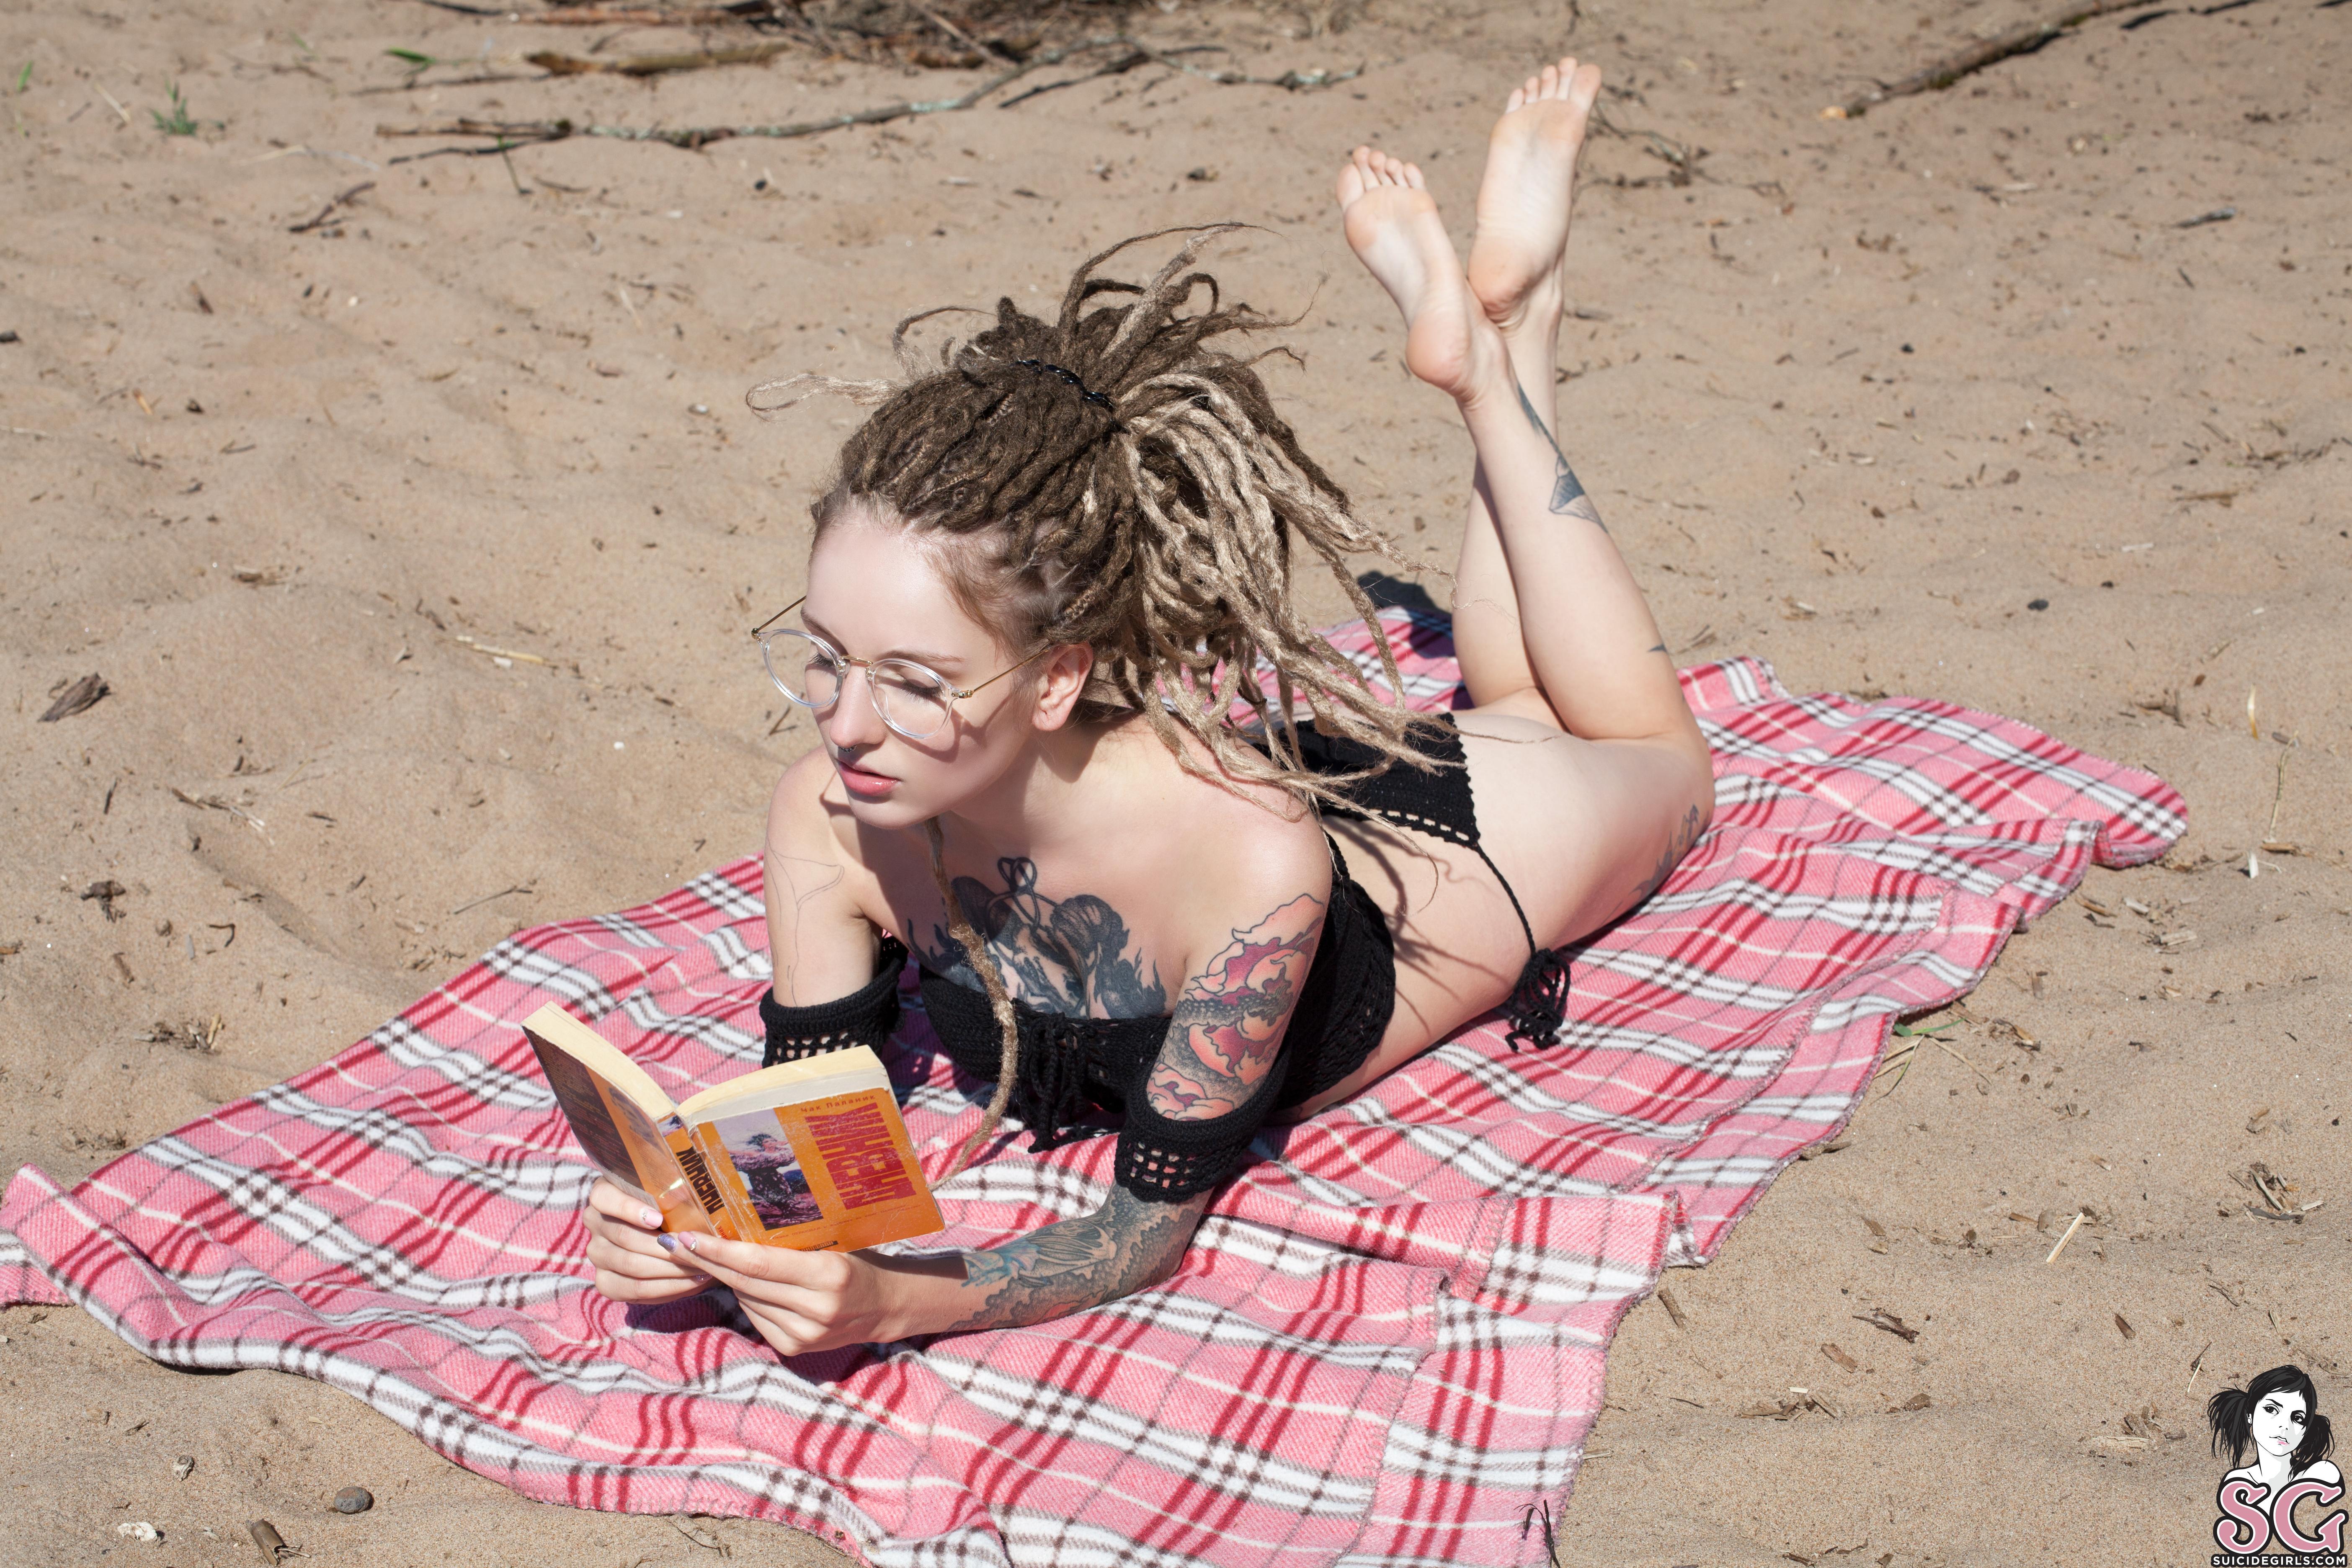 People 5616x3744 Alyona German women model dreadlocks women outdoors beach pierced septum bikini books reading tattoo inked girls Suicide Girls